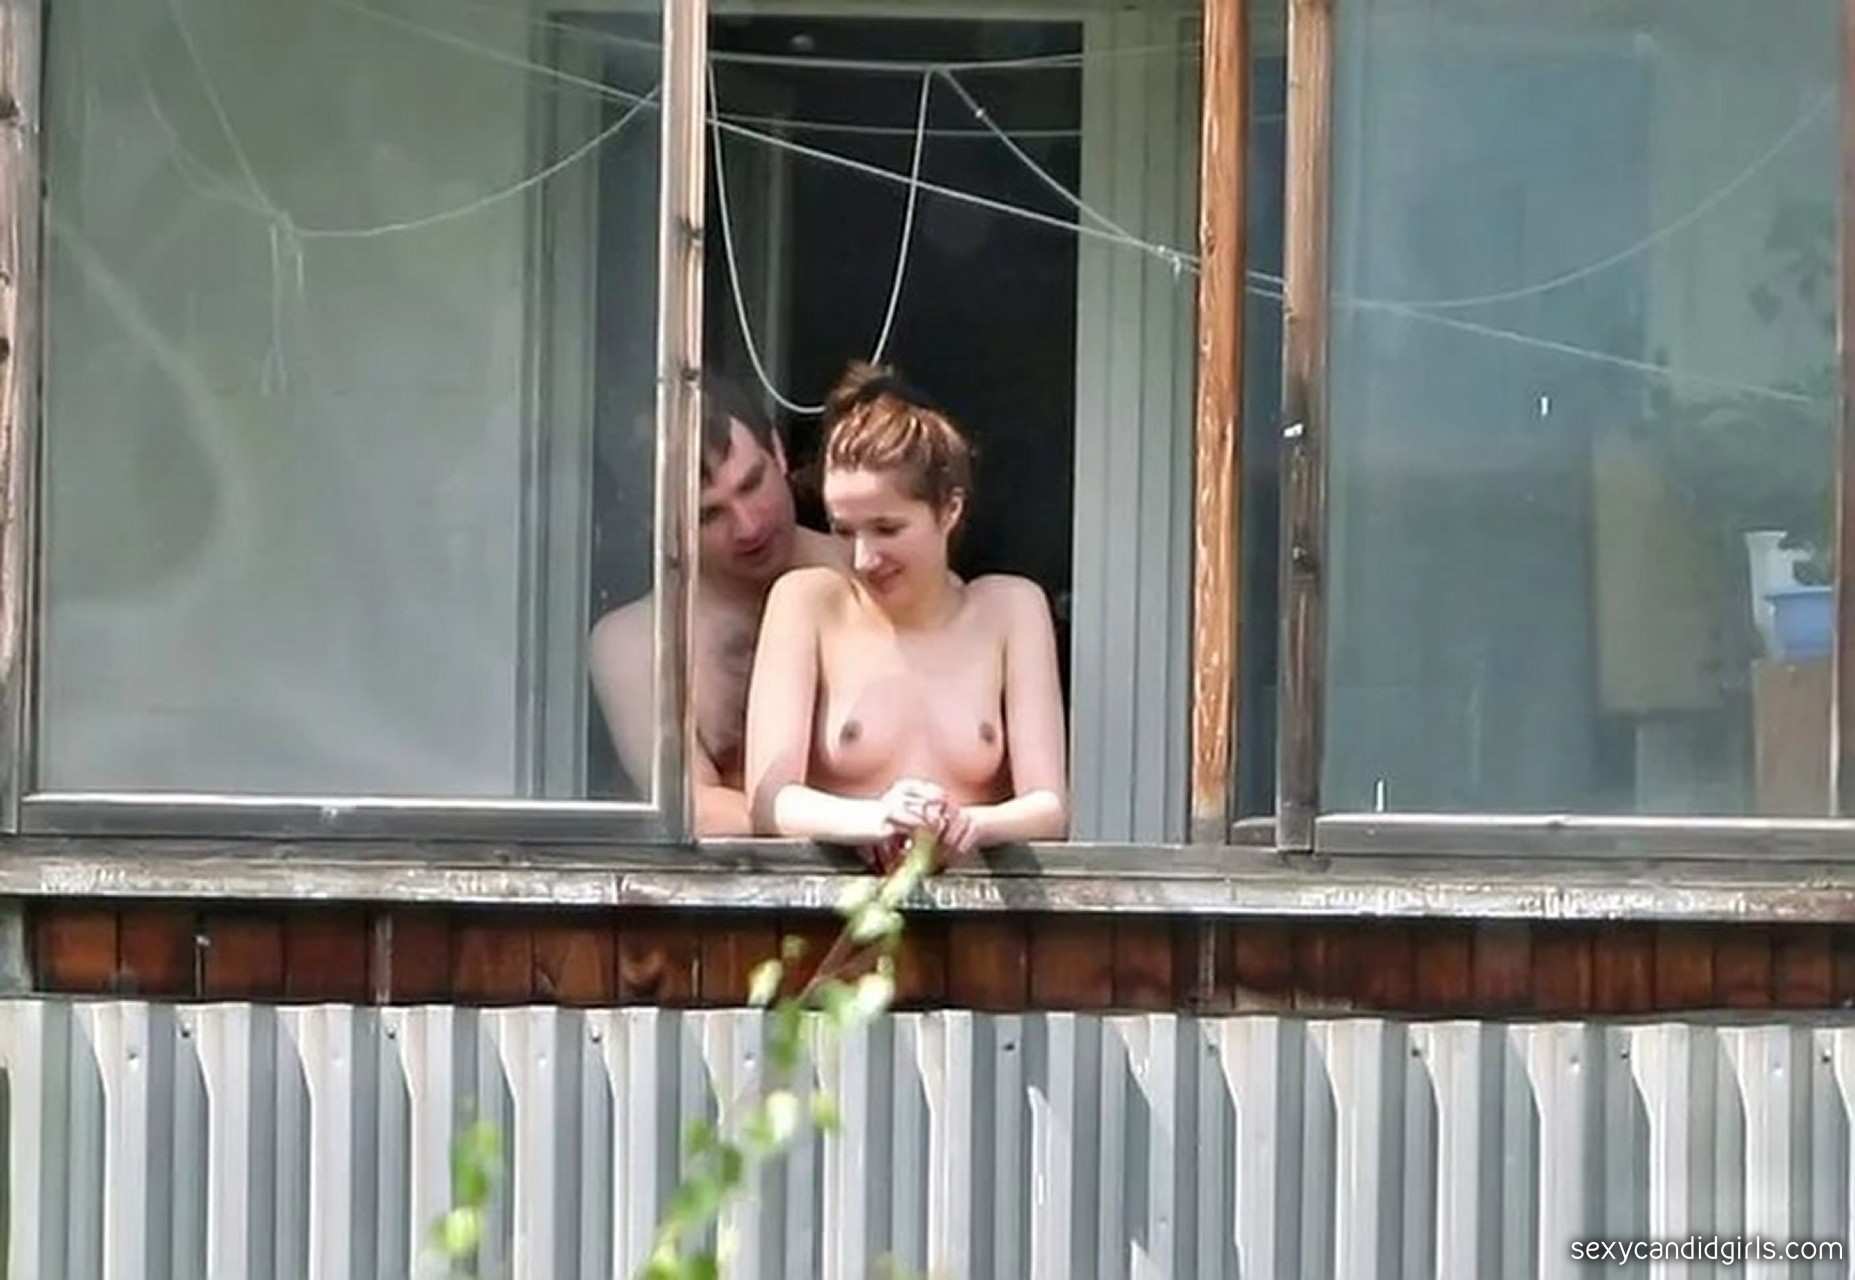 spying on nude girlfriend